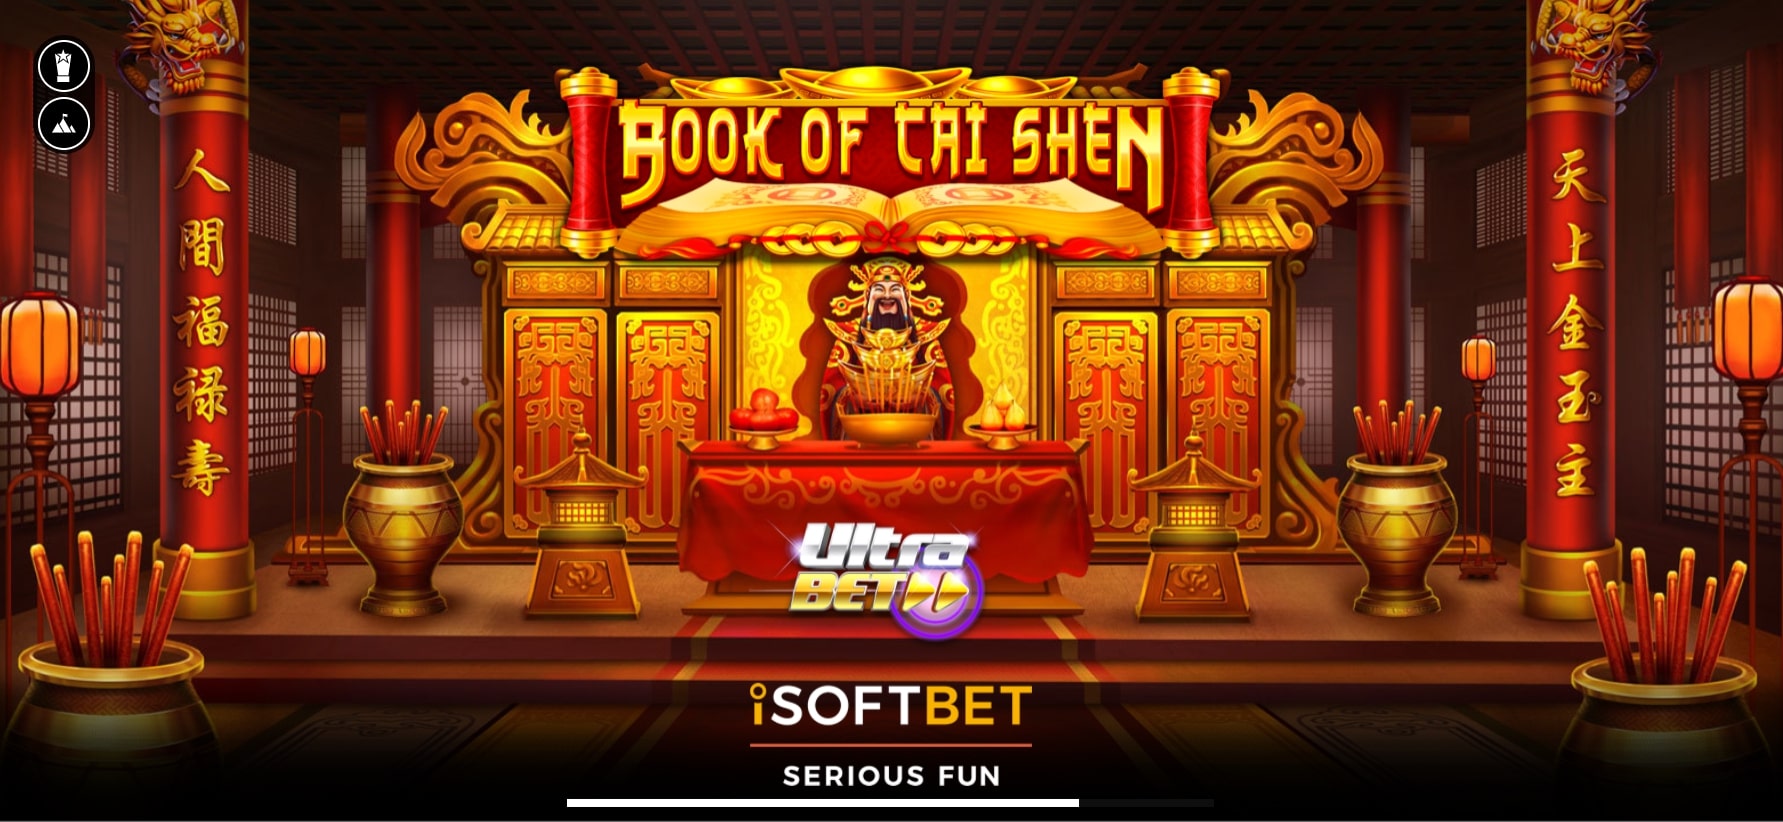 Đón lộc Thần Tài trong slot game Book of Cai Shen ra sao?